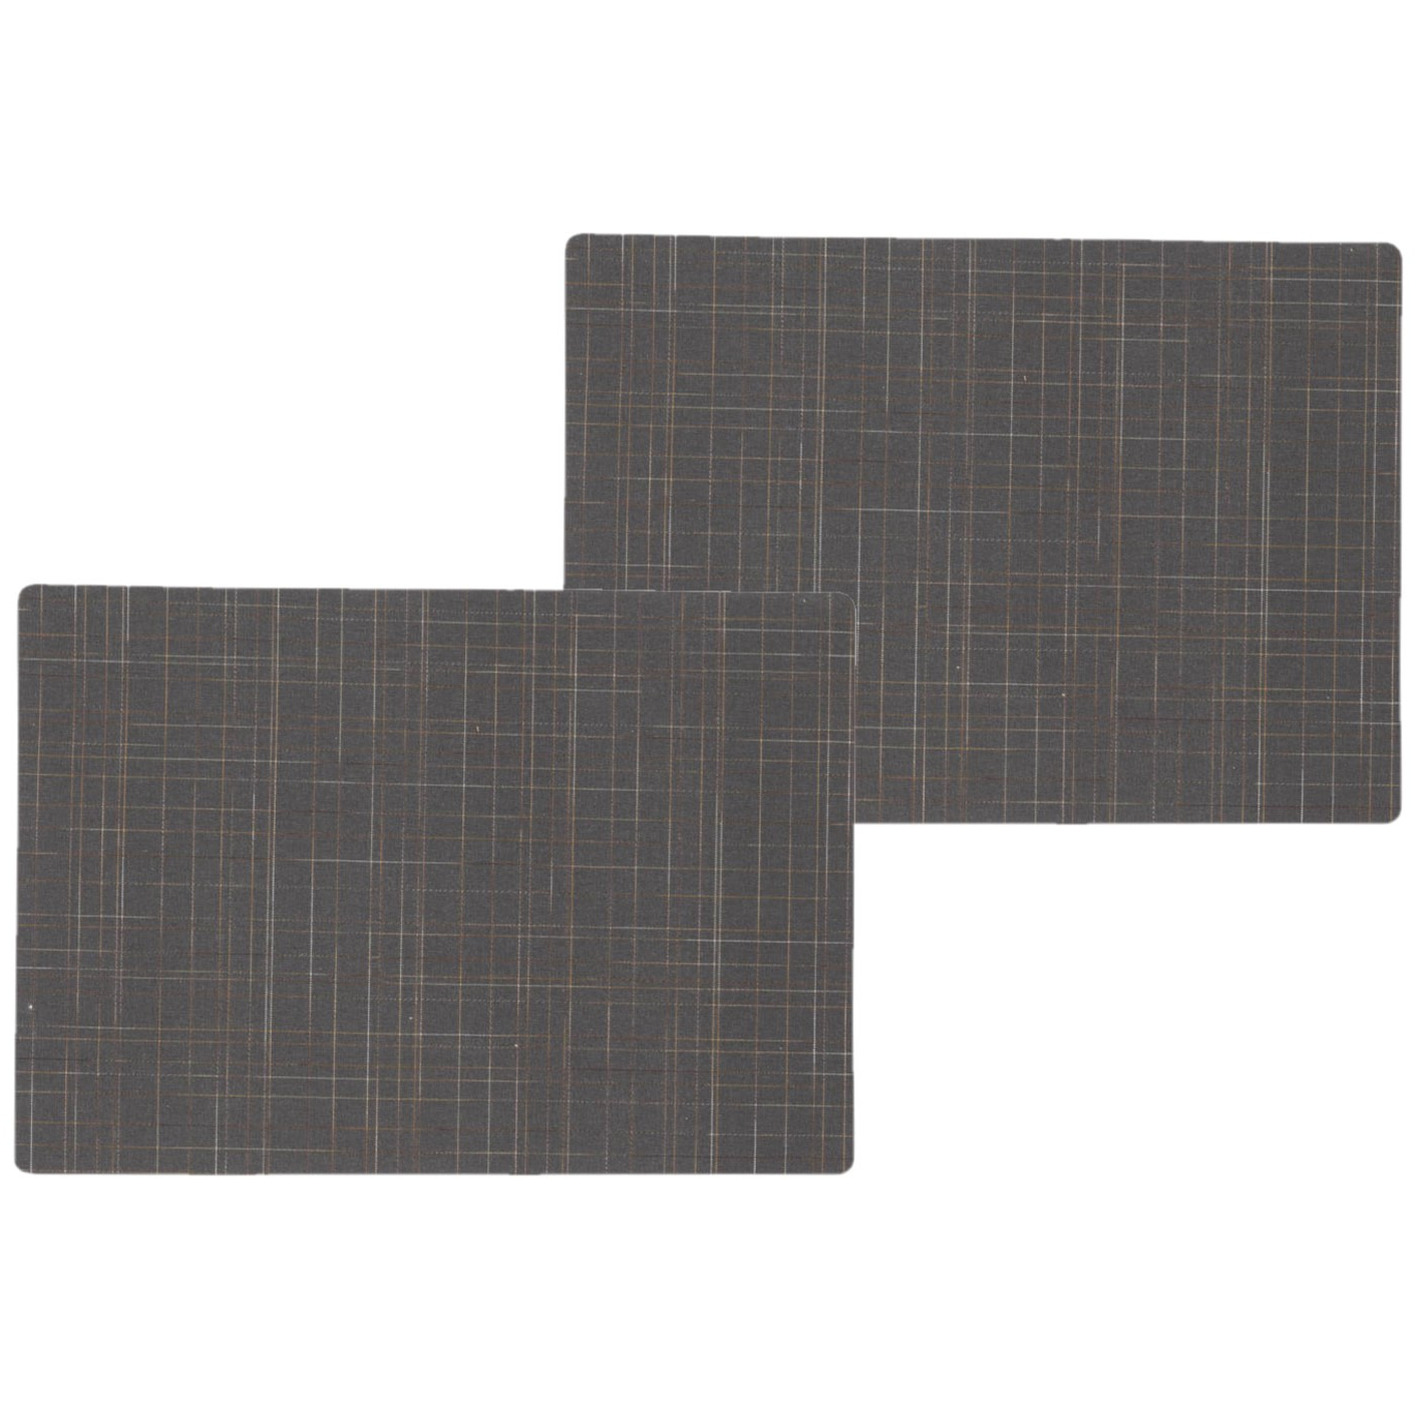 Wicotex 10x stuks stevige luxe Tafel placemats Liso grijs 30 x 43 cm -